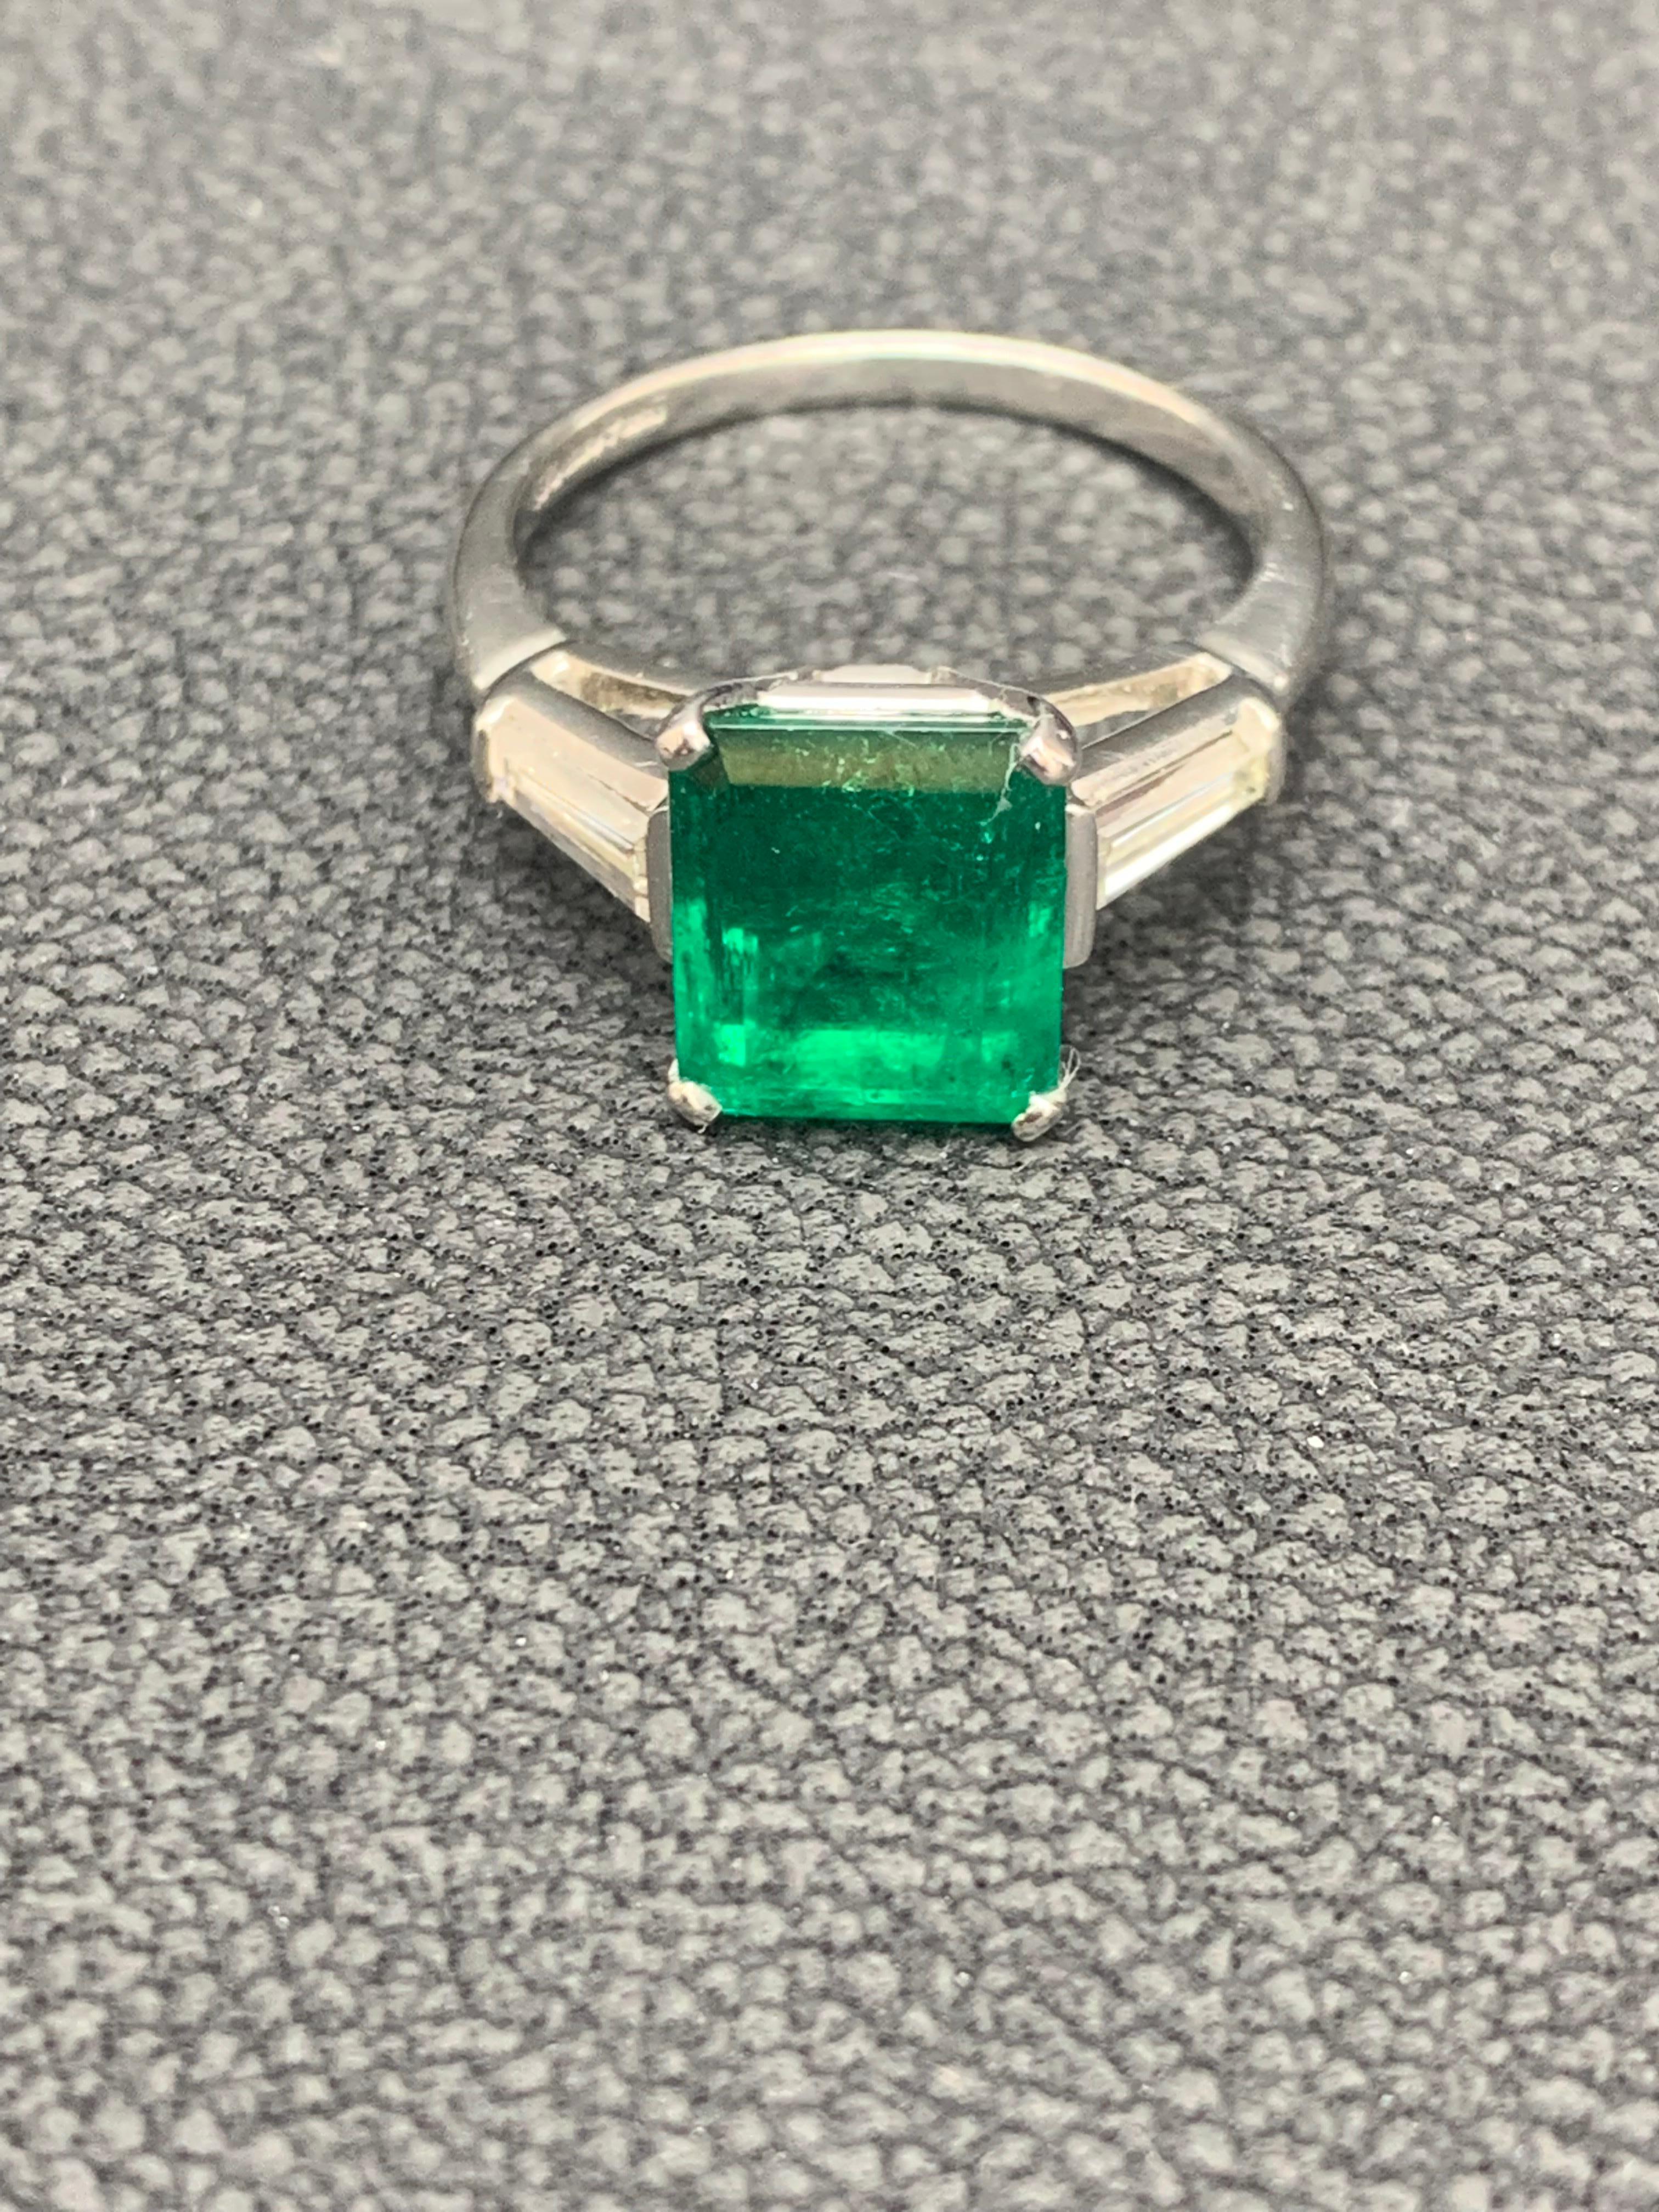 Certified 3.04 Carat Emerald Cut Columbian Emerald Diamond Ring For Sale 1